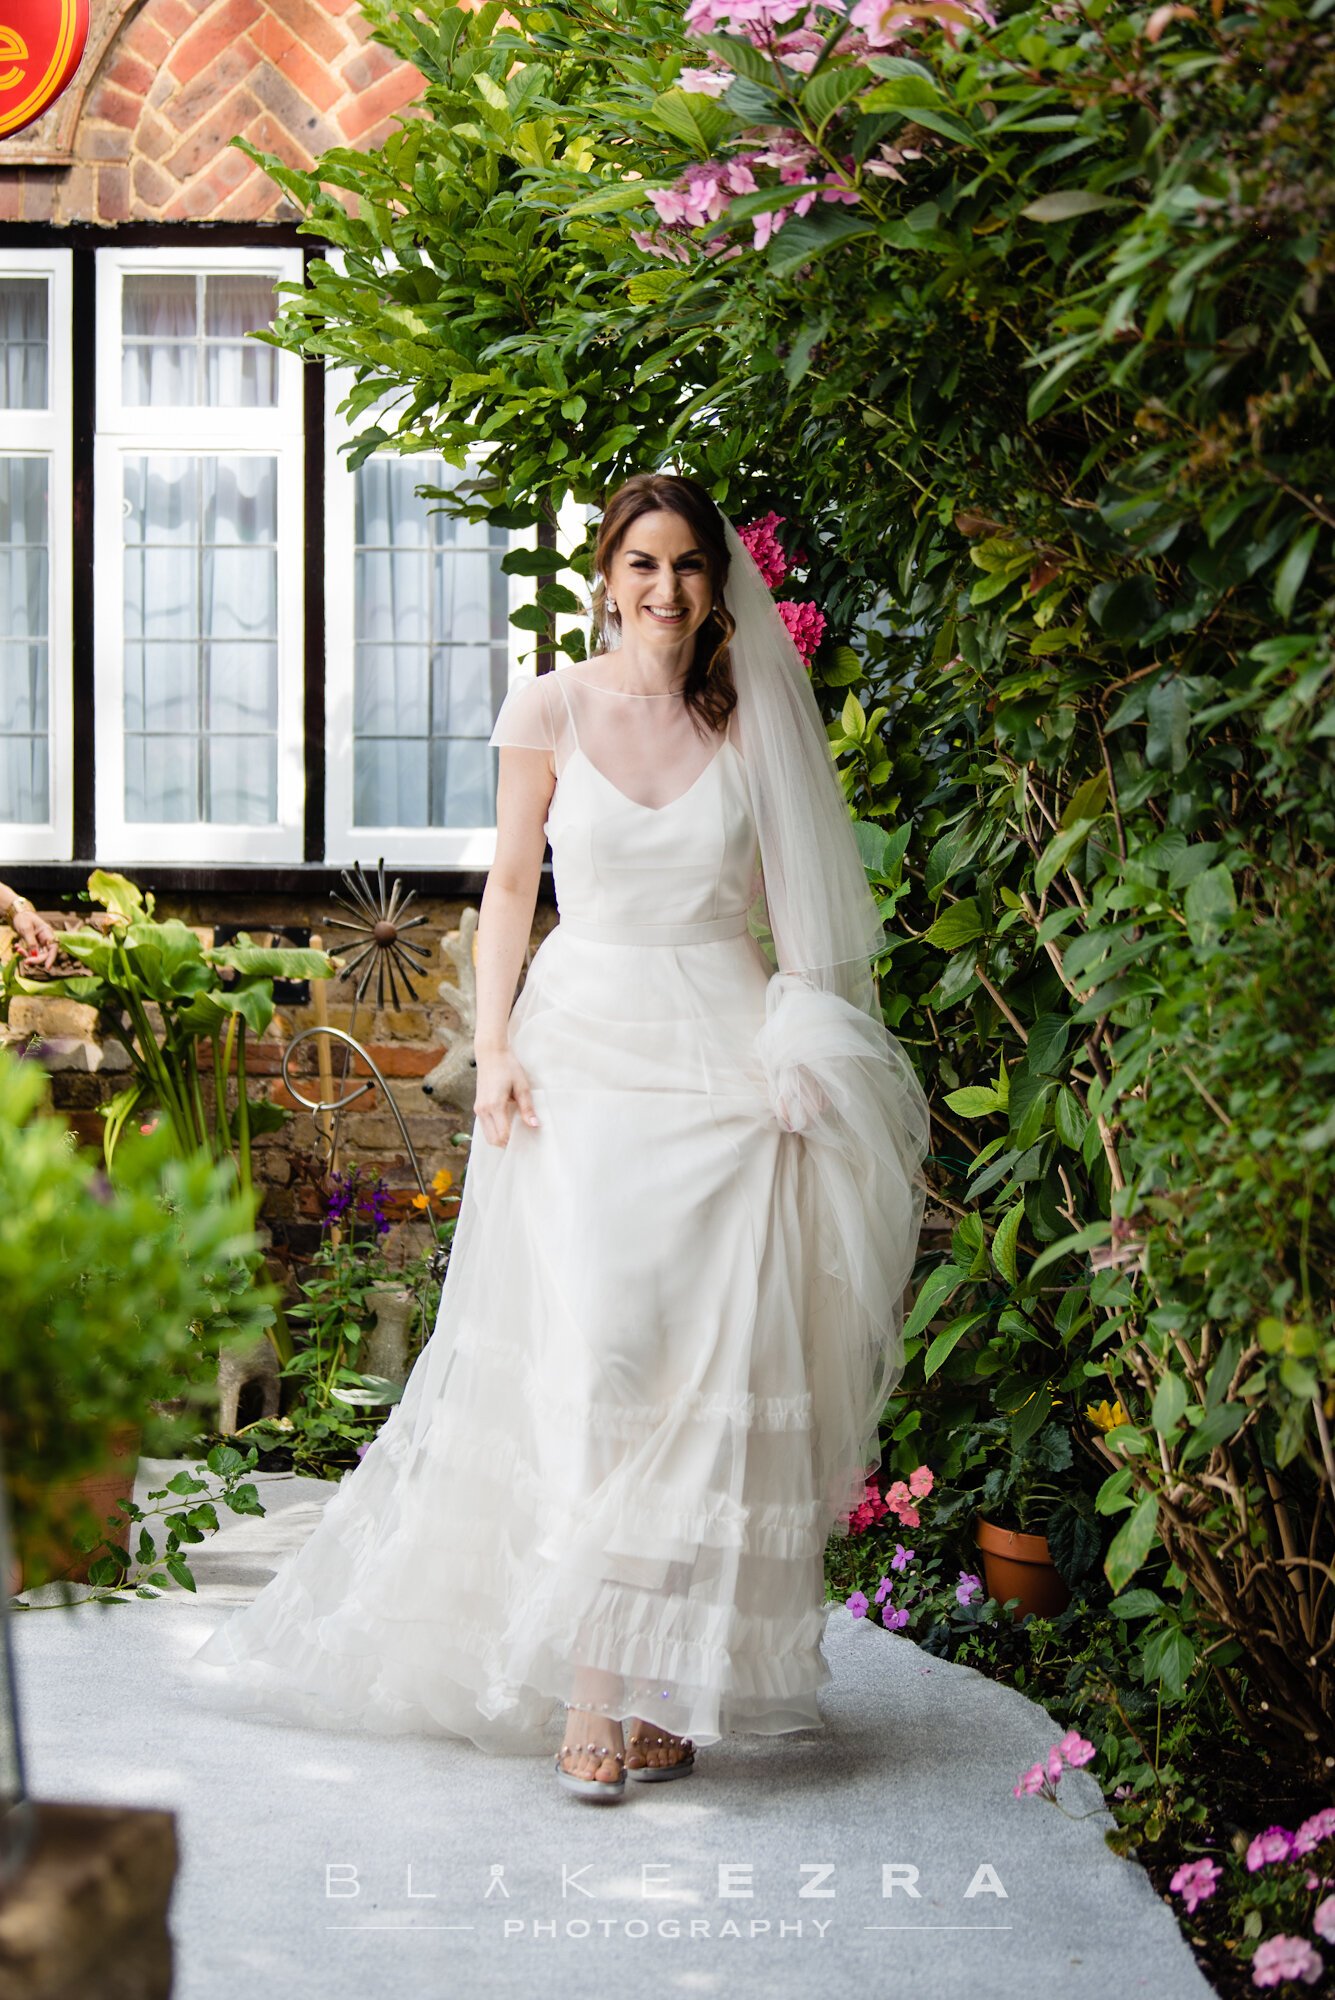 Beautiful bride Samantha wore a wedding dress by Halfpenny London